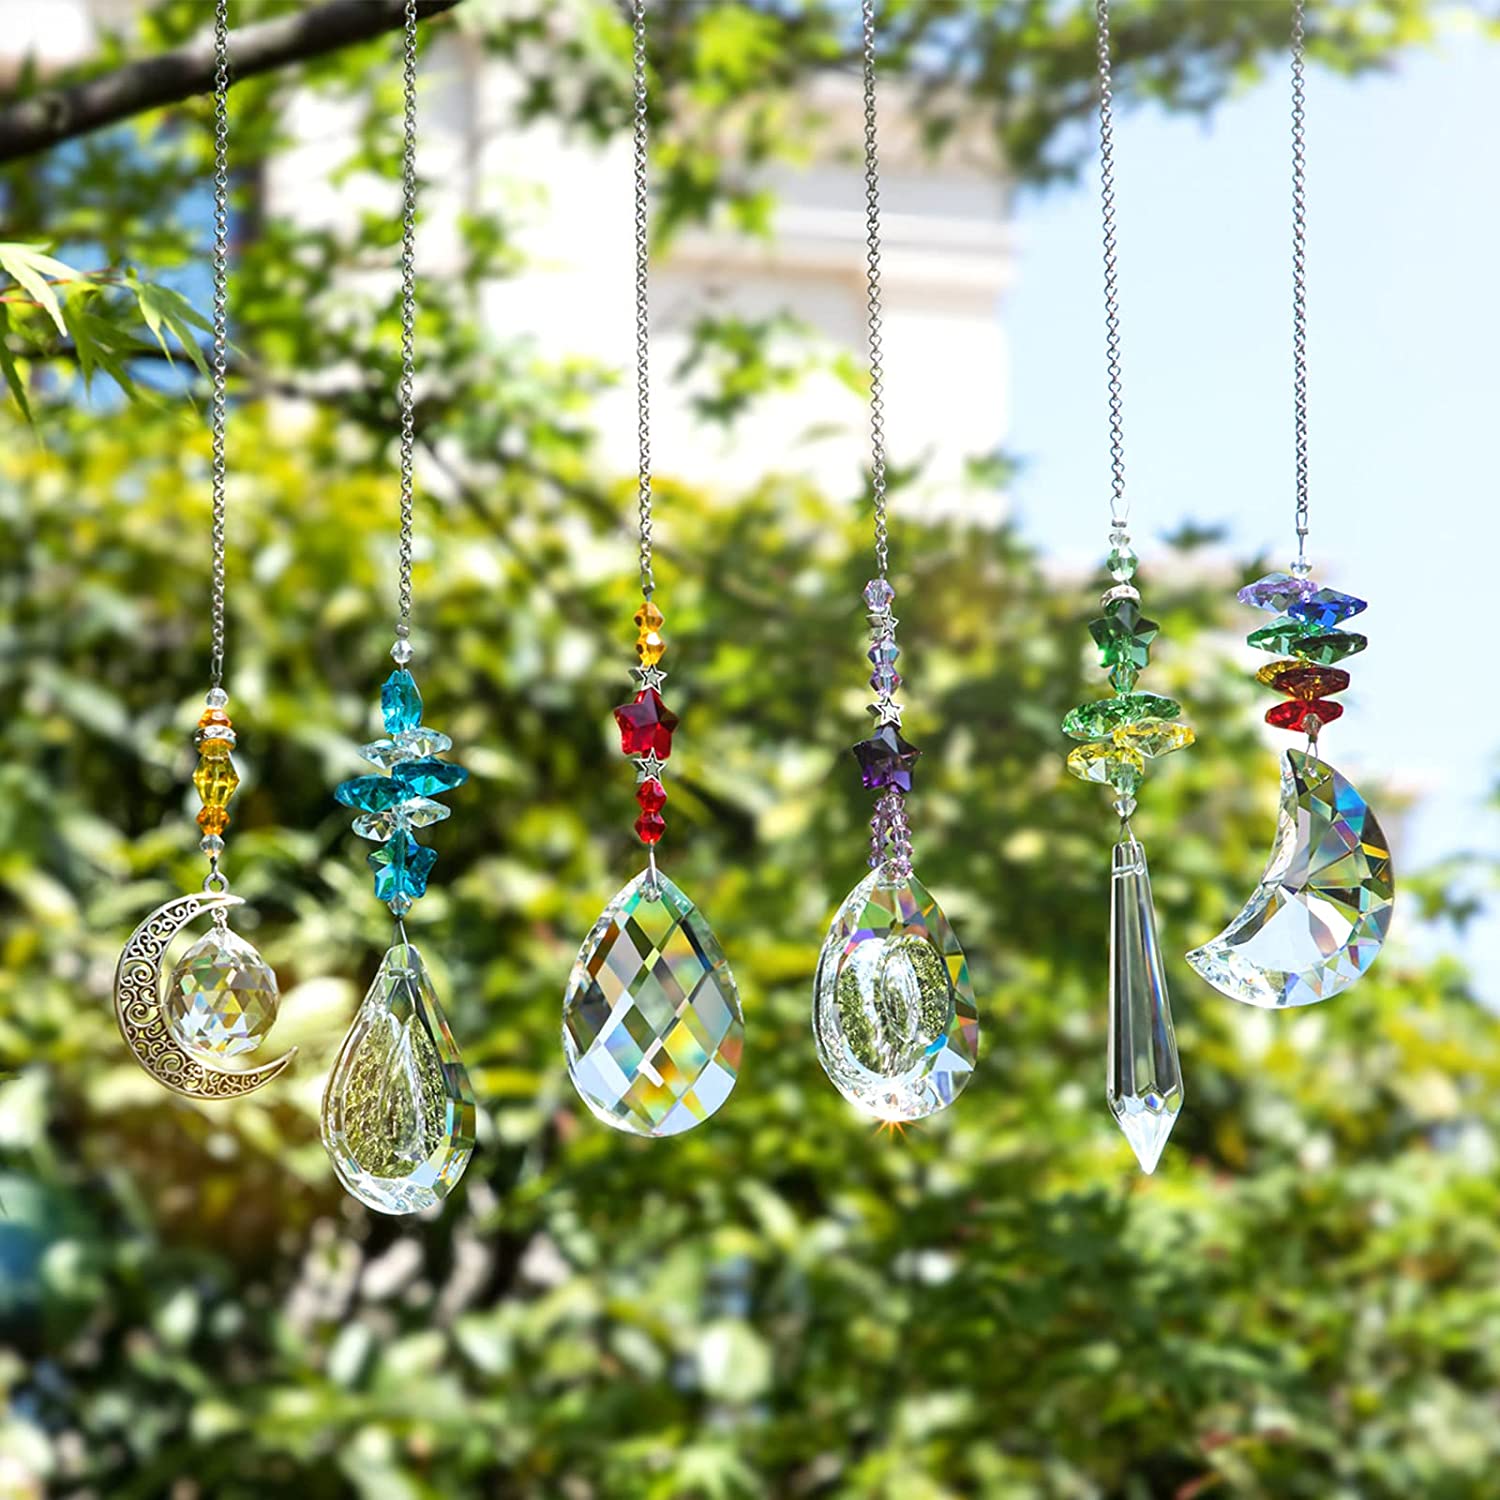 6PCS Suncatchers Crystal Chandelier Prism Hanging Ornament for Window Home Garden,Rainbow Maker Crystal Pendant